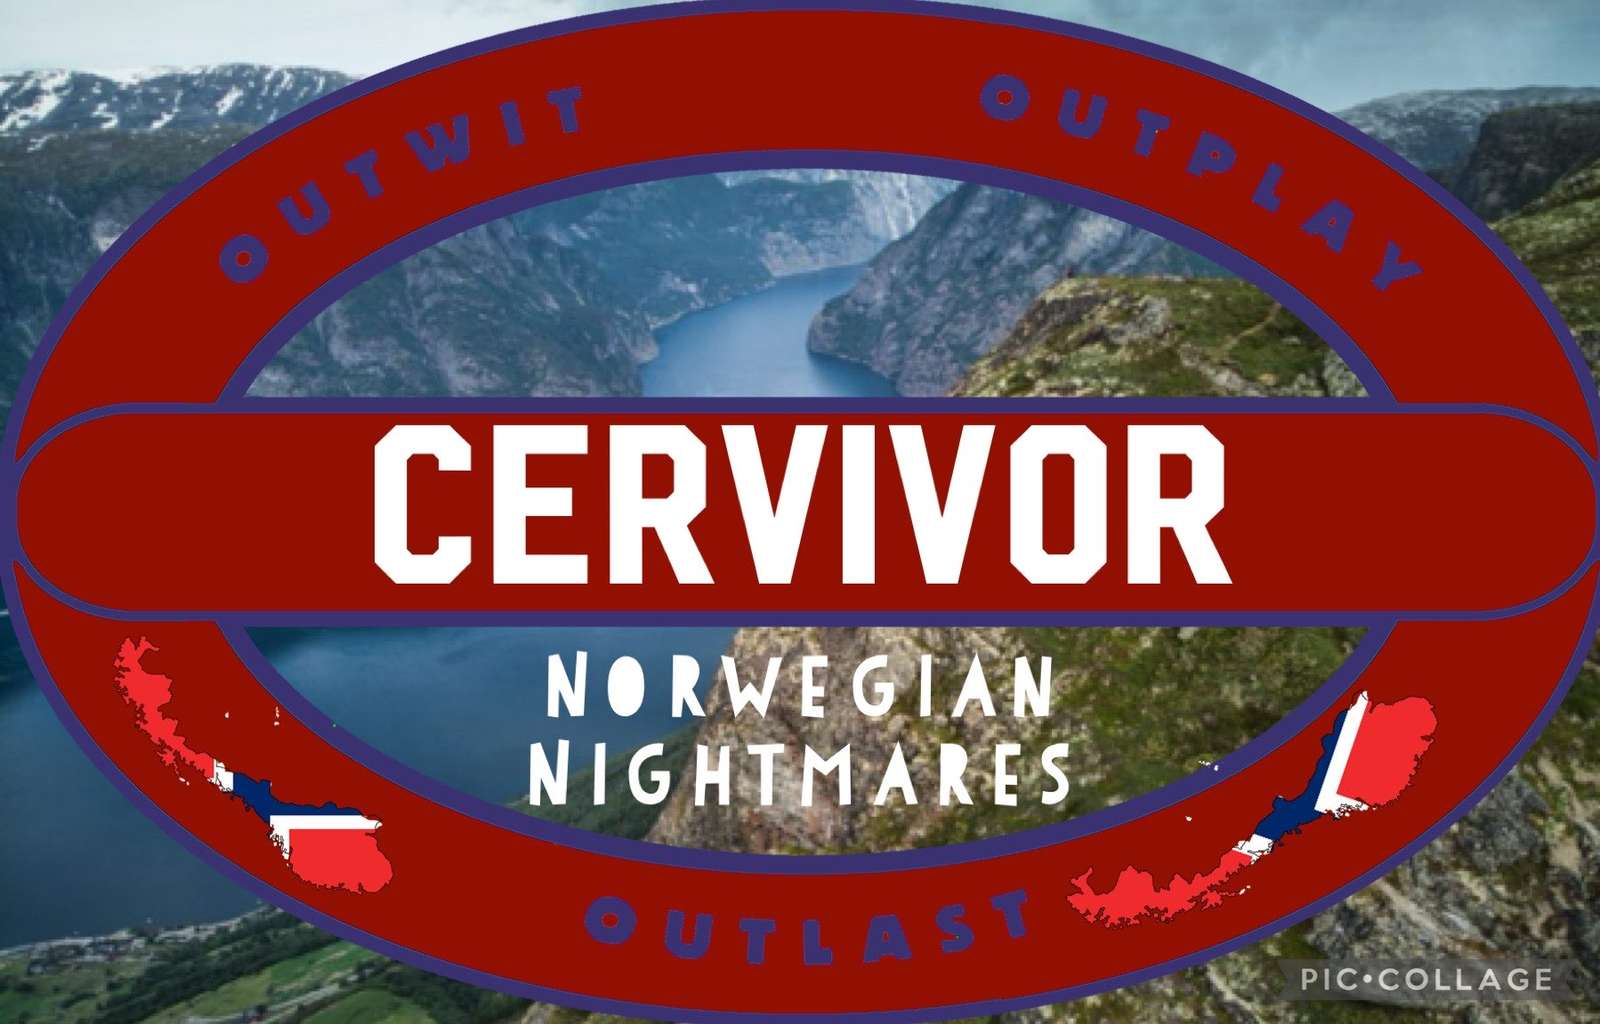 Cervivor S9 puzzle online from photo